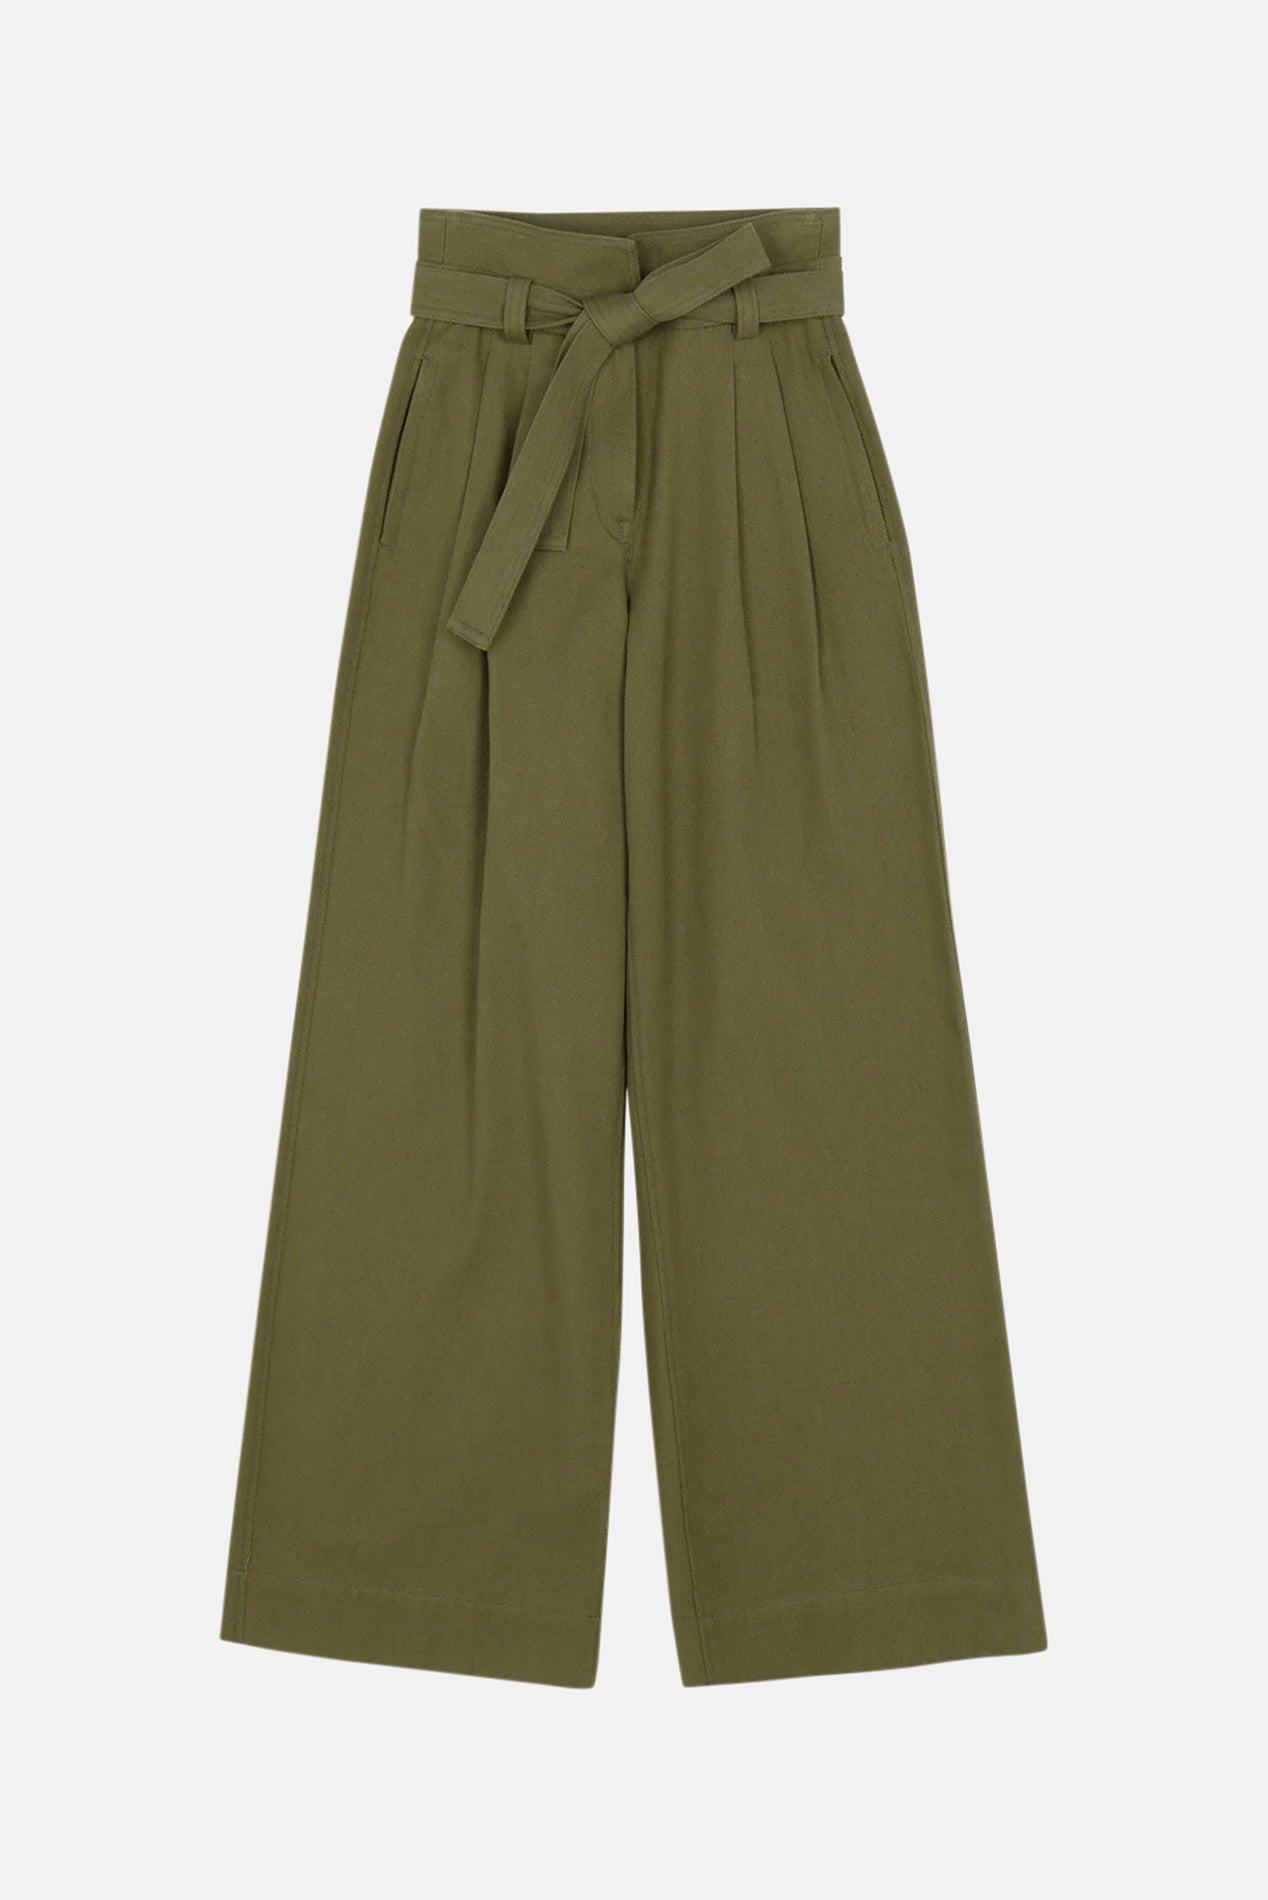 H&M Womens Pants Szie 8 Tan Paperbag High Rise Wide Leg Deep